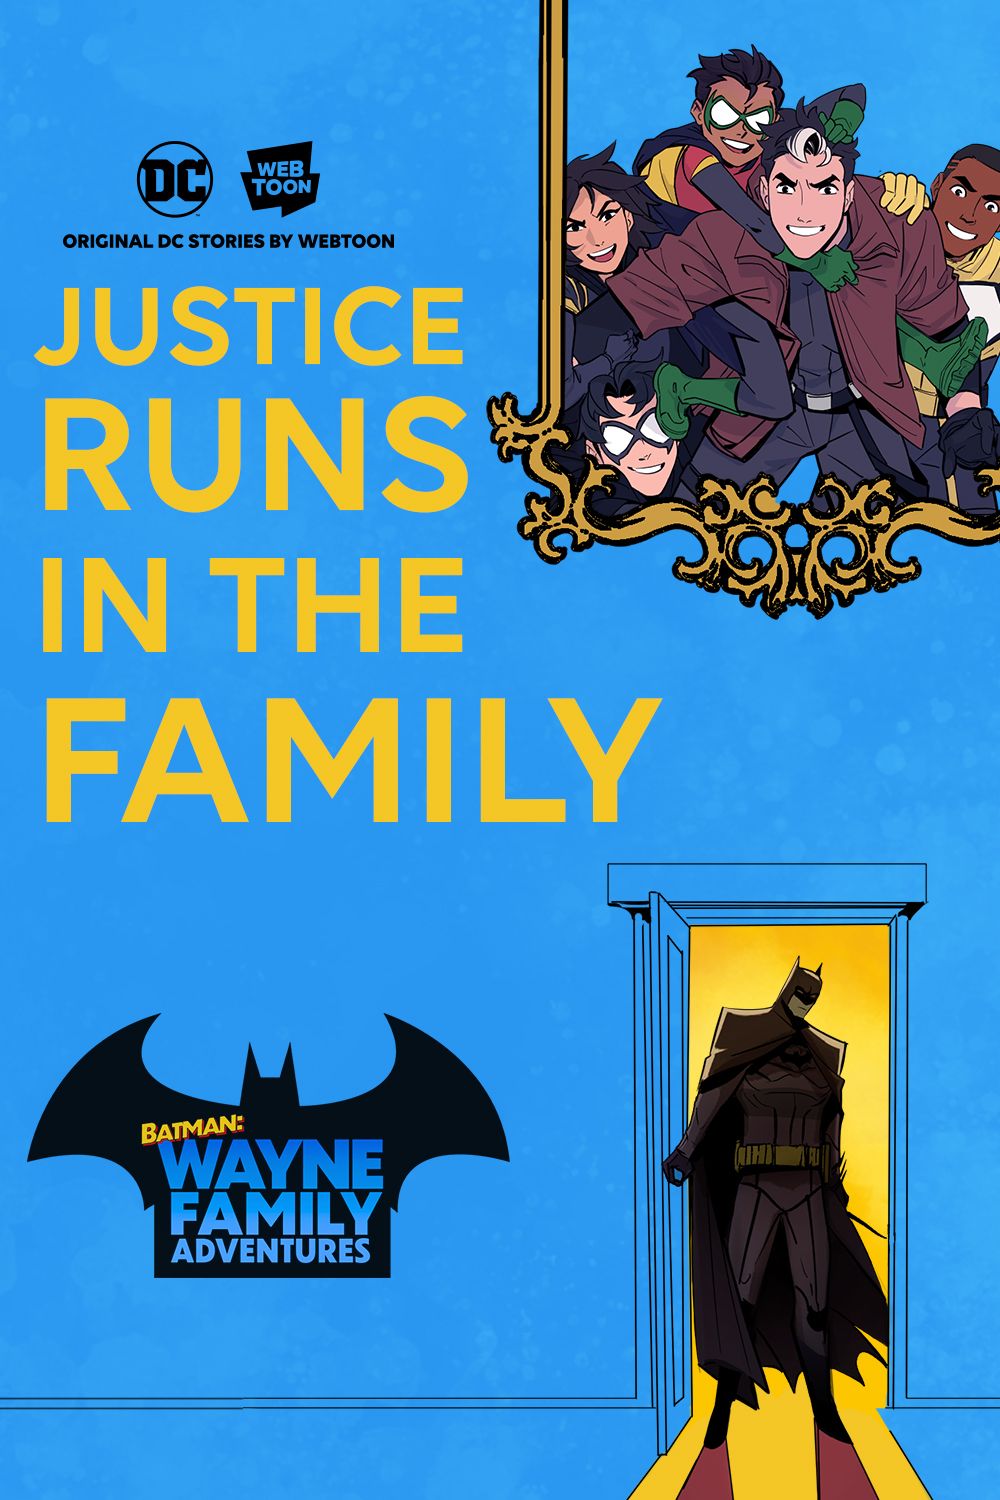 Batman: Wayne Family Adventures DC and Webtoon series